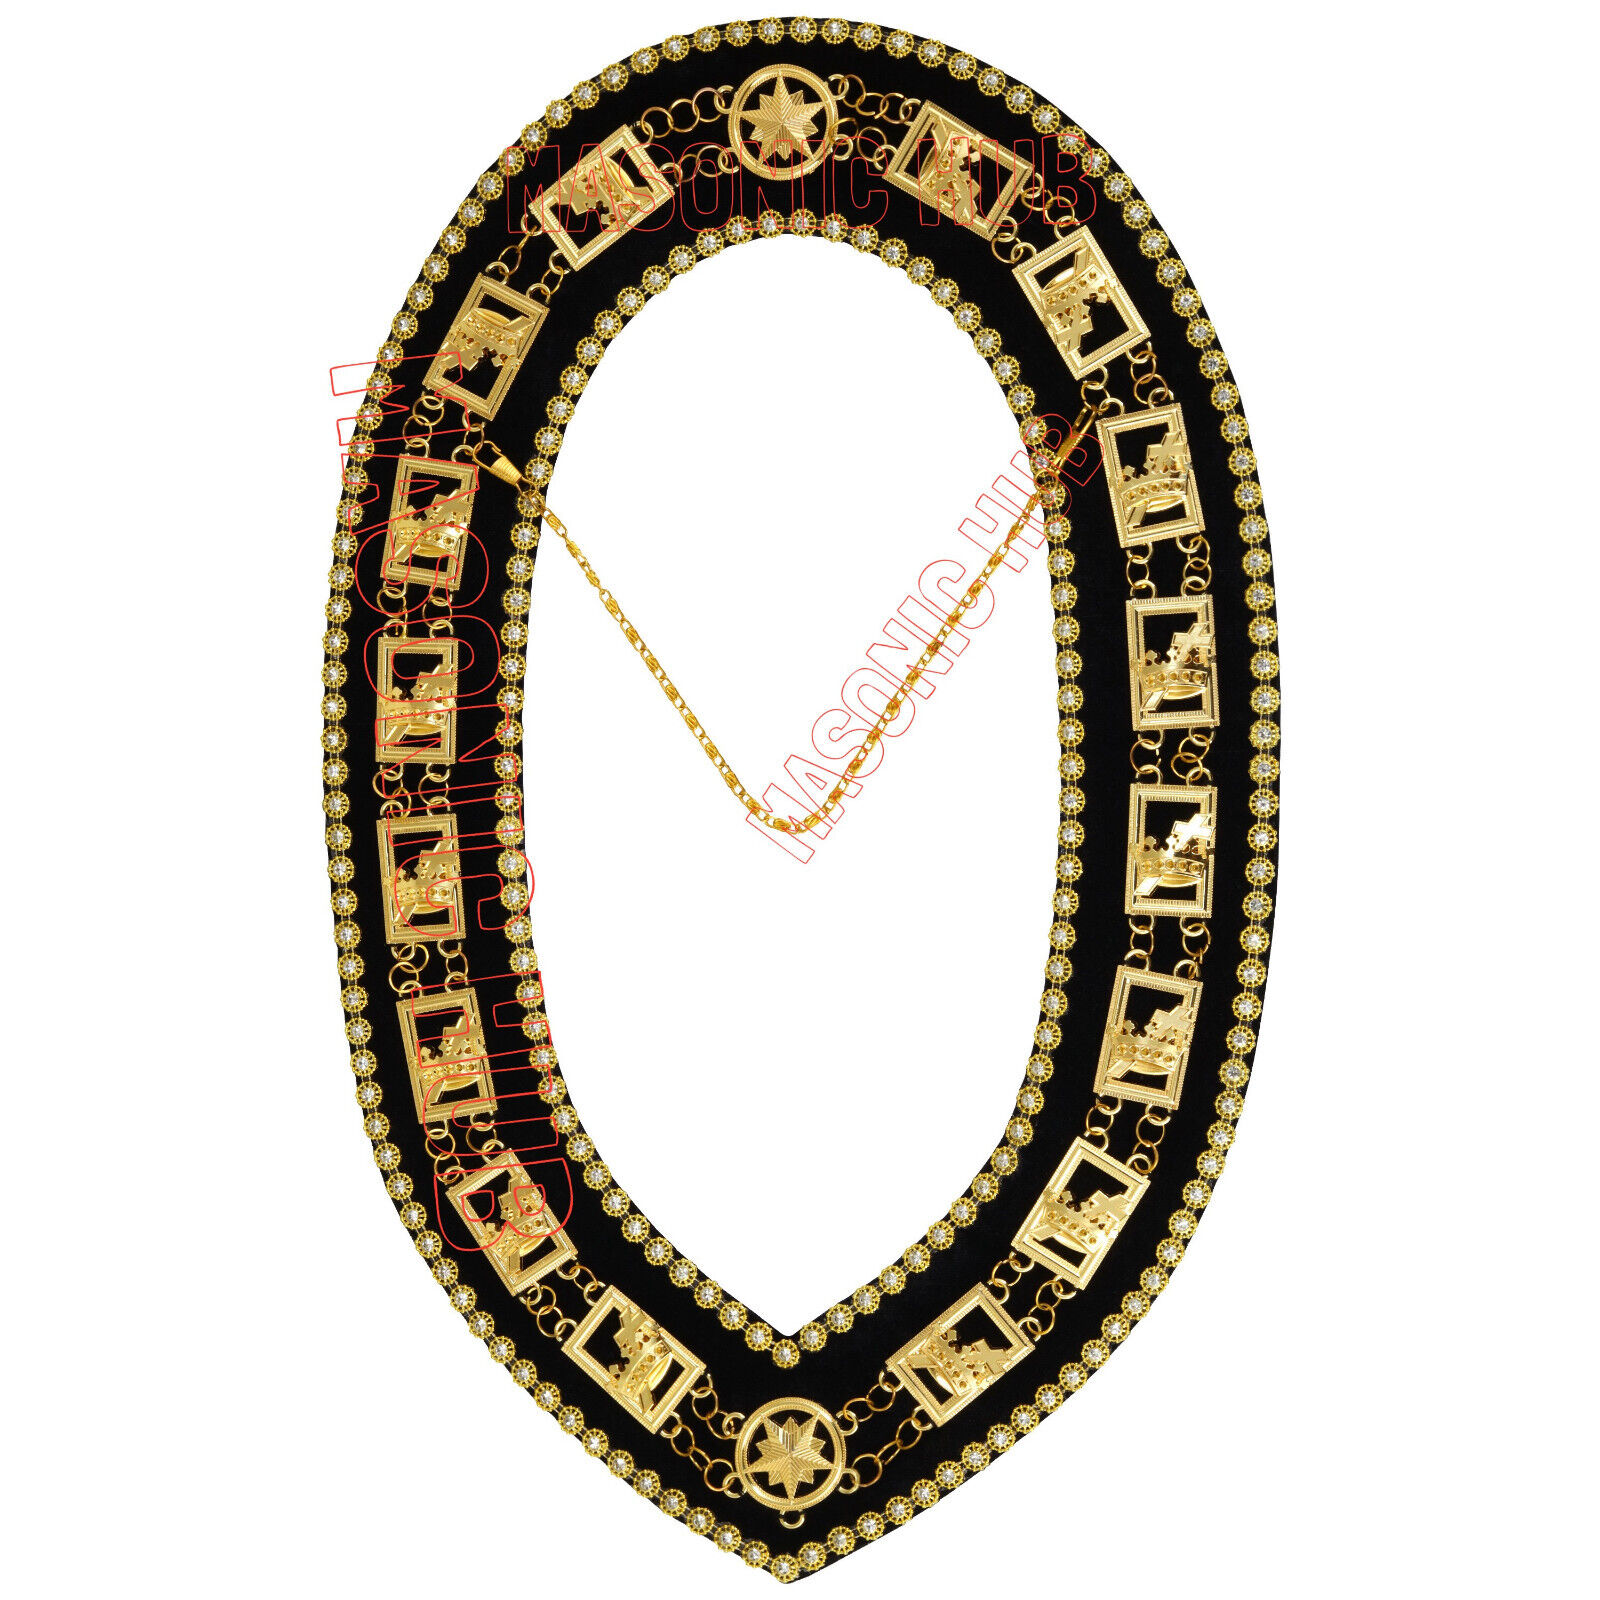 Masonic Knights Templar Commandery Chain Collar - Gold Plated with Rhinestones